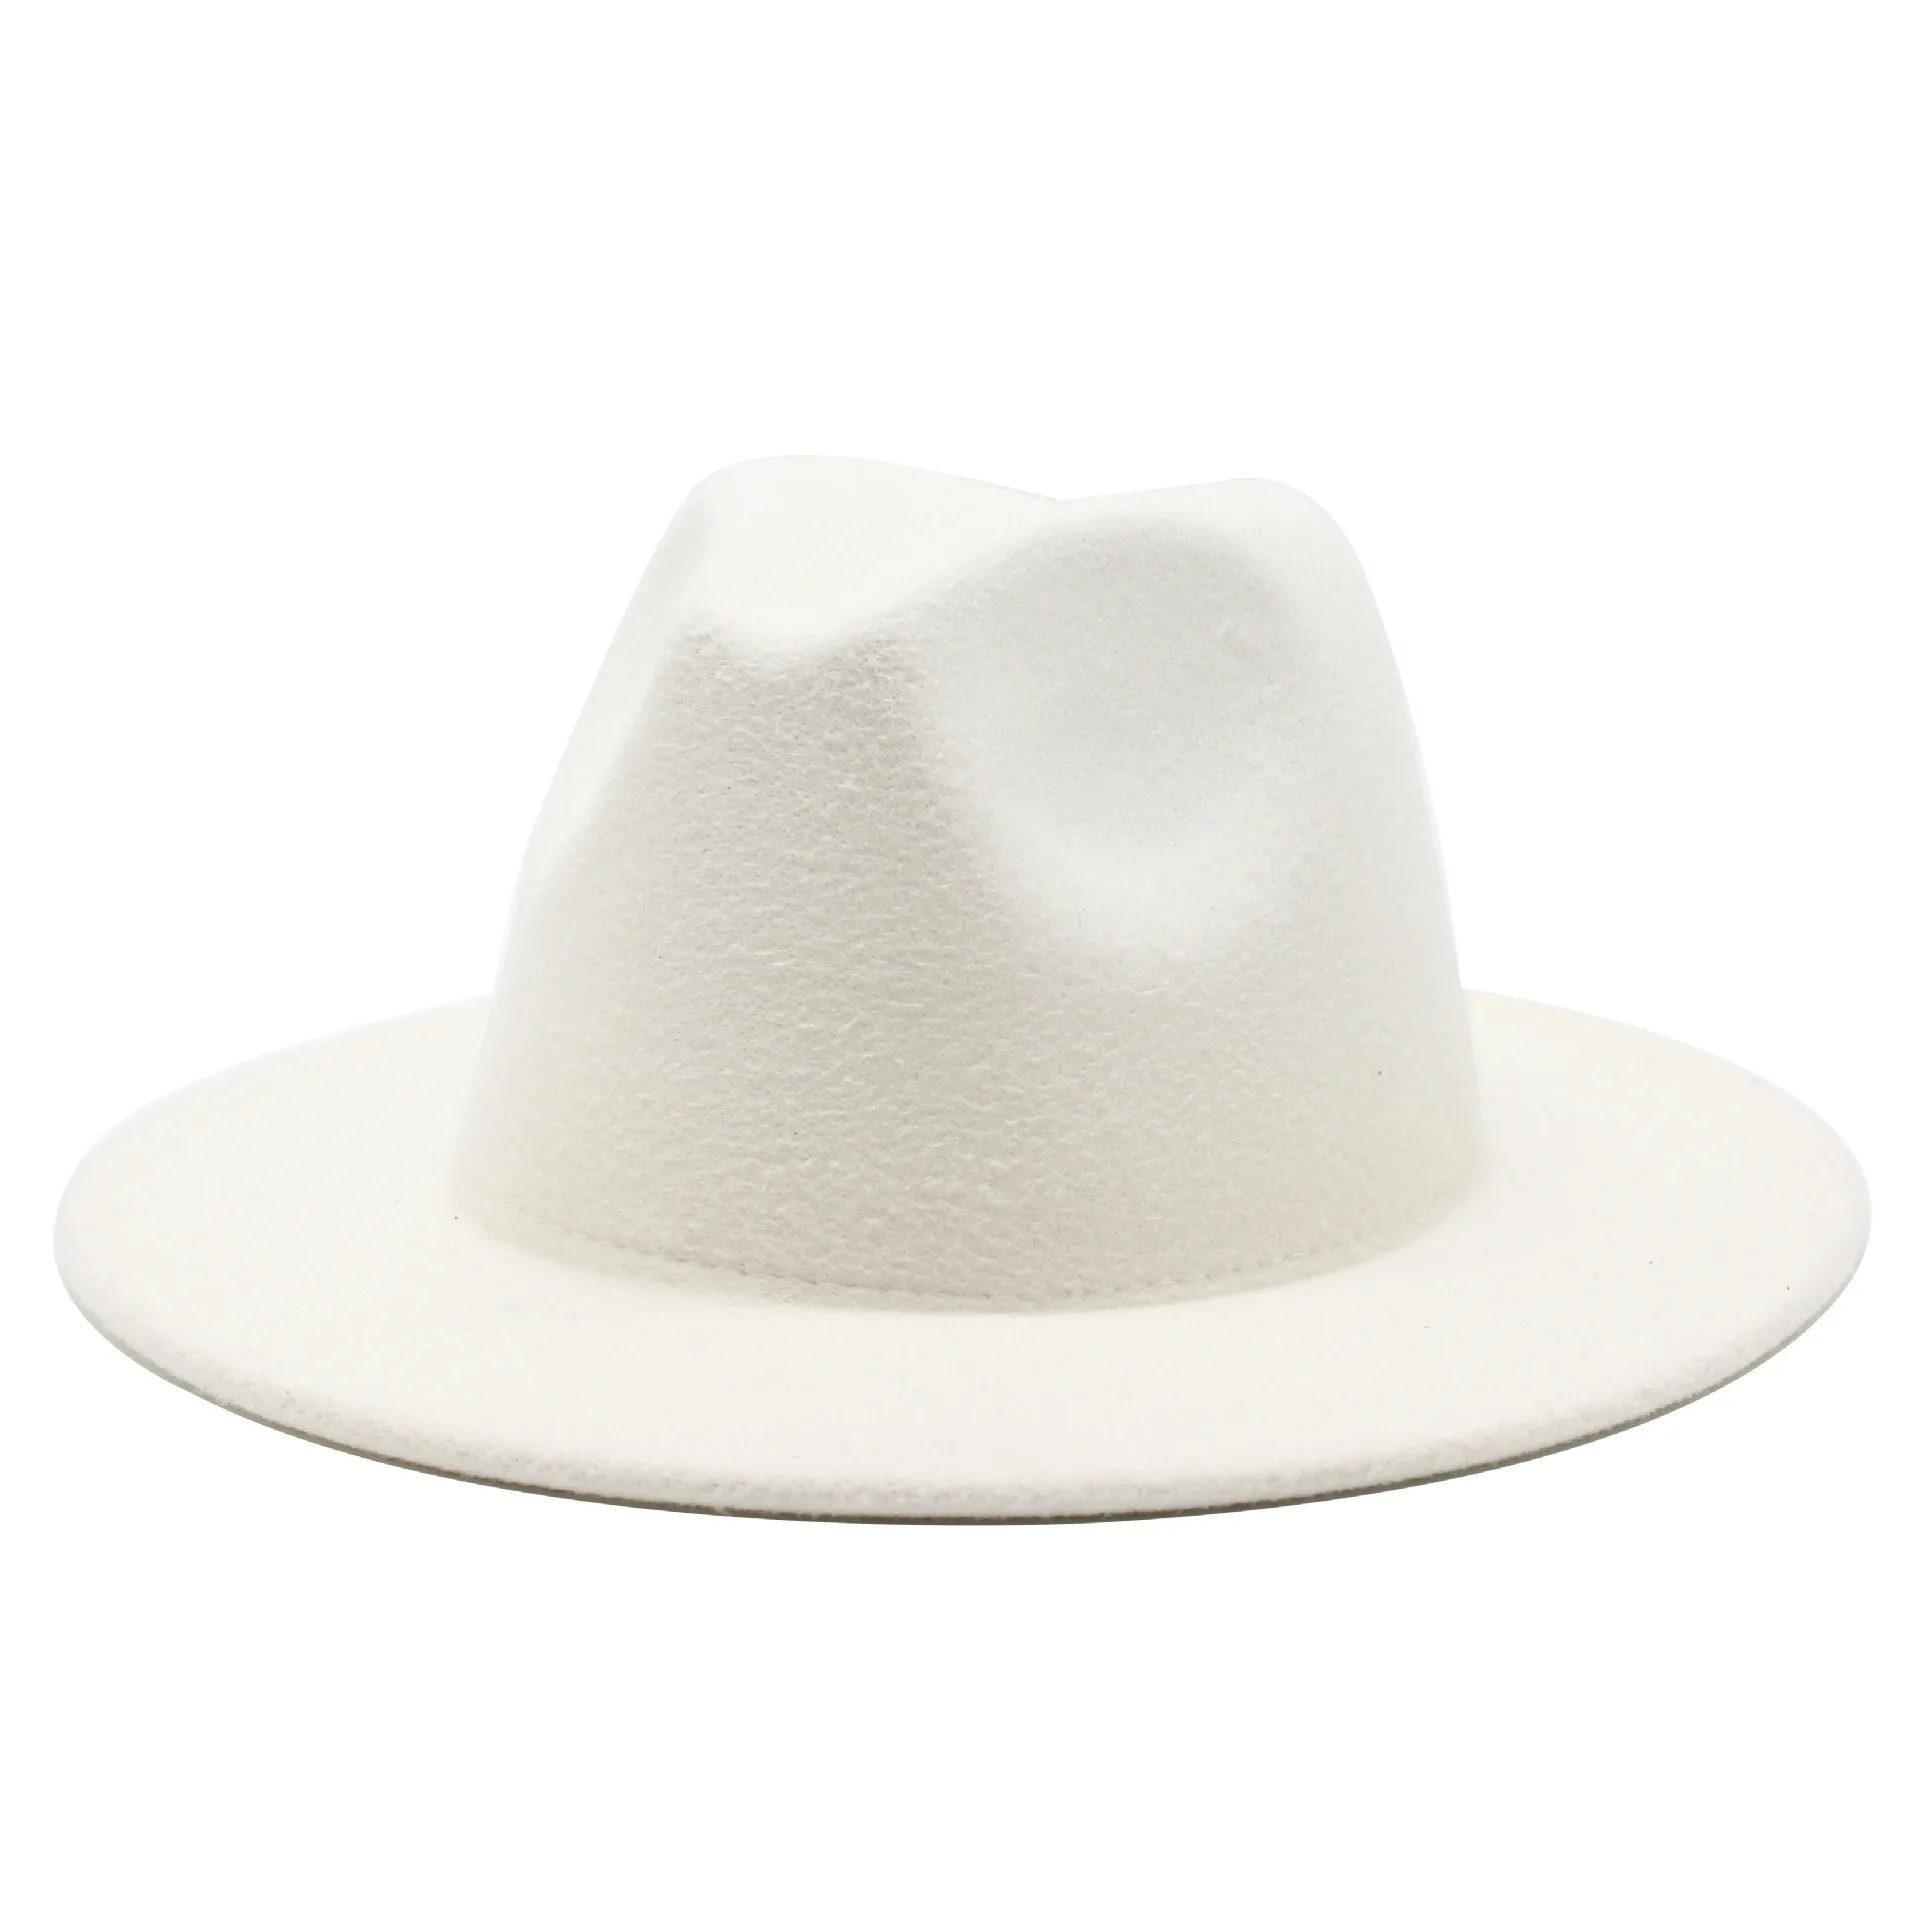 Retro classic felt jazz hat fedora hat with big brim Panama for women men black red top hat Ladies top hat imitation wool  cap 6